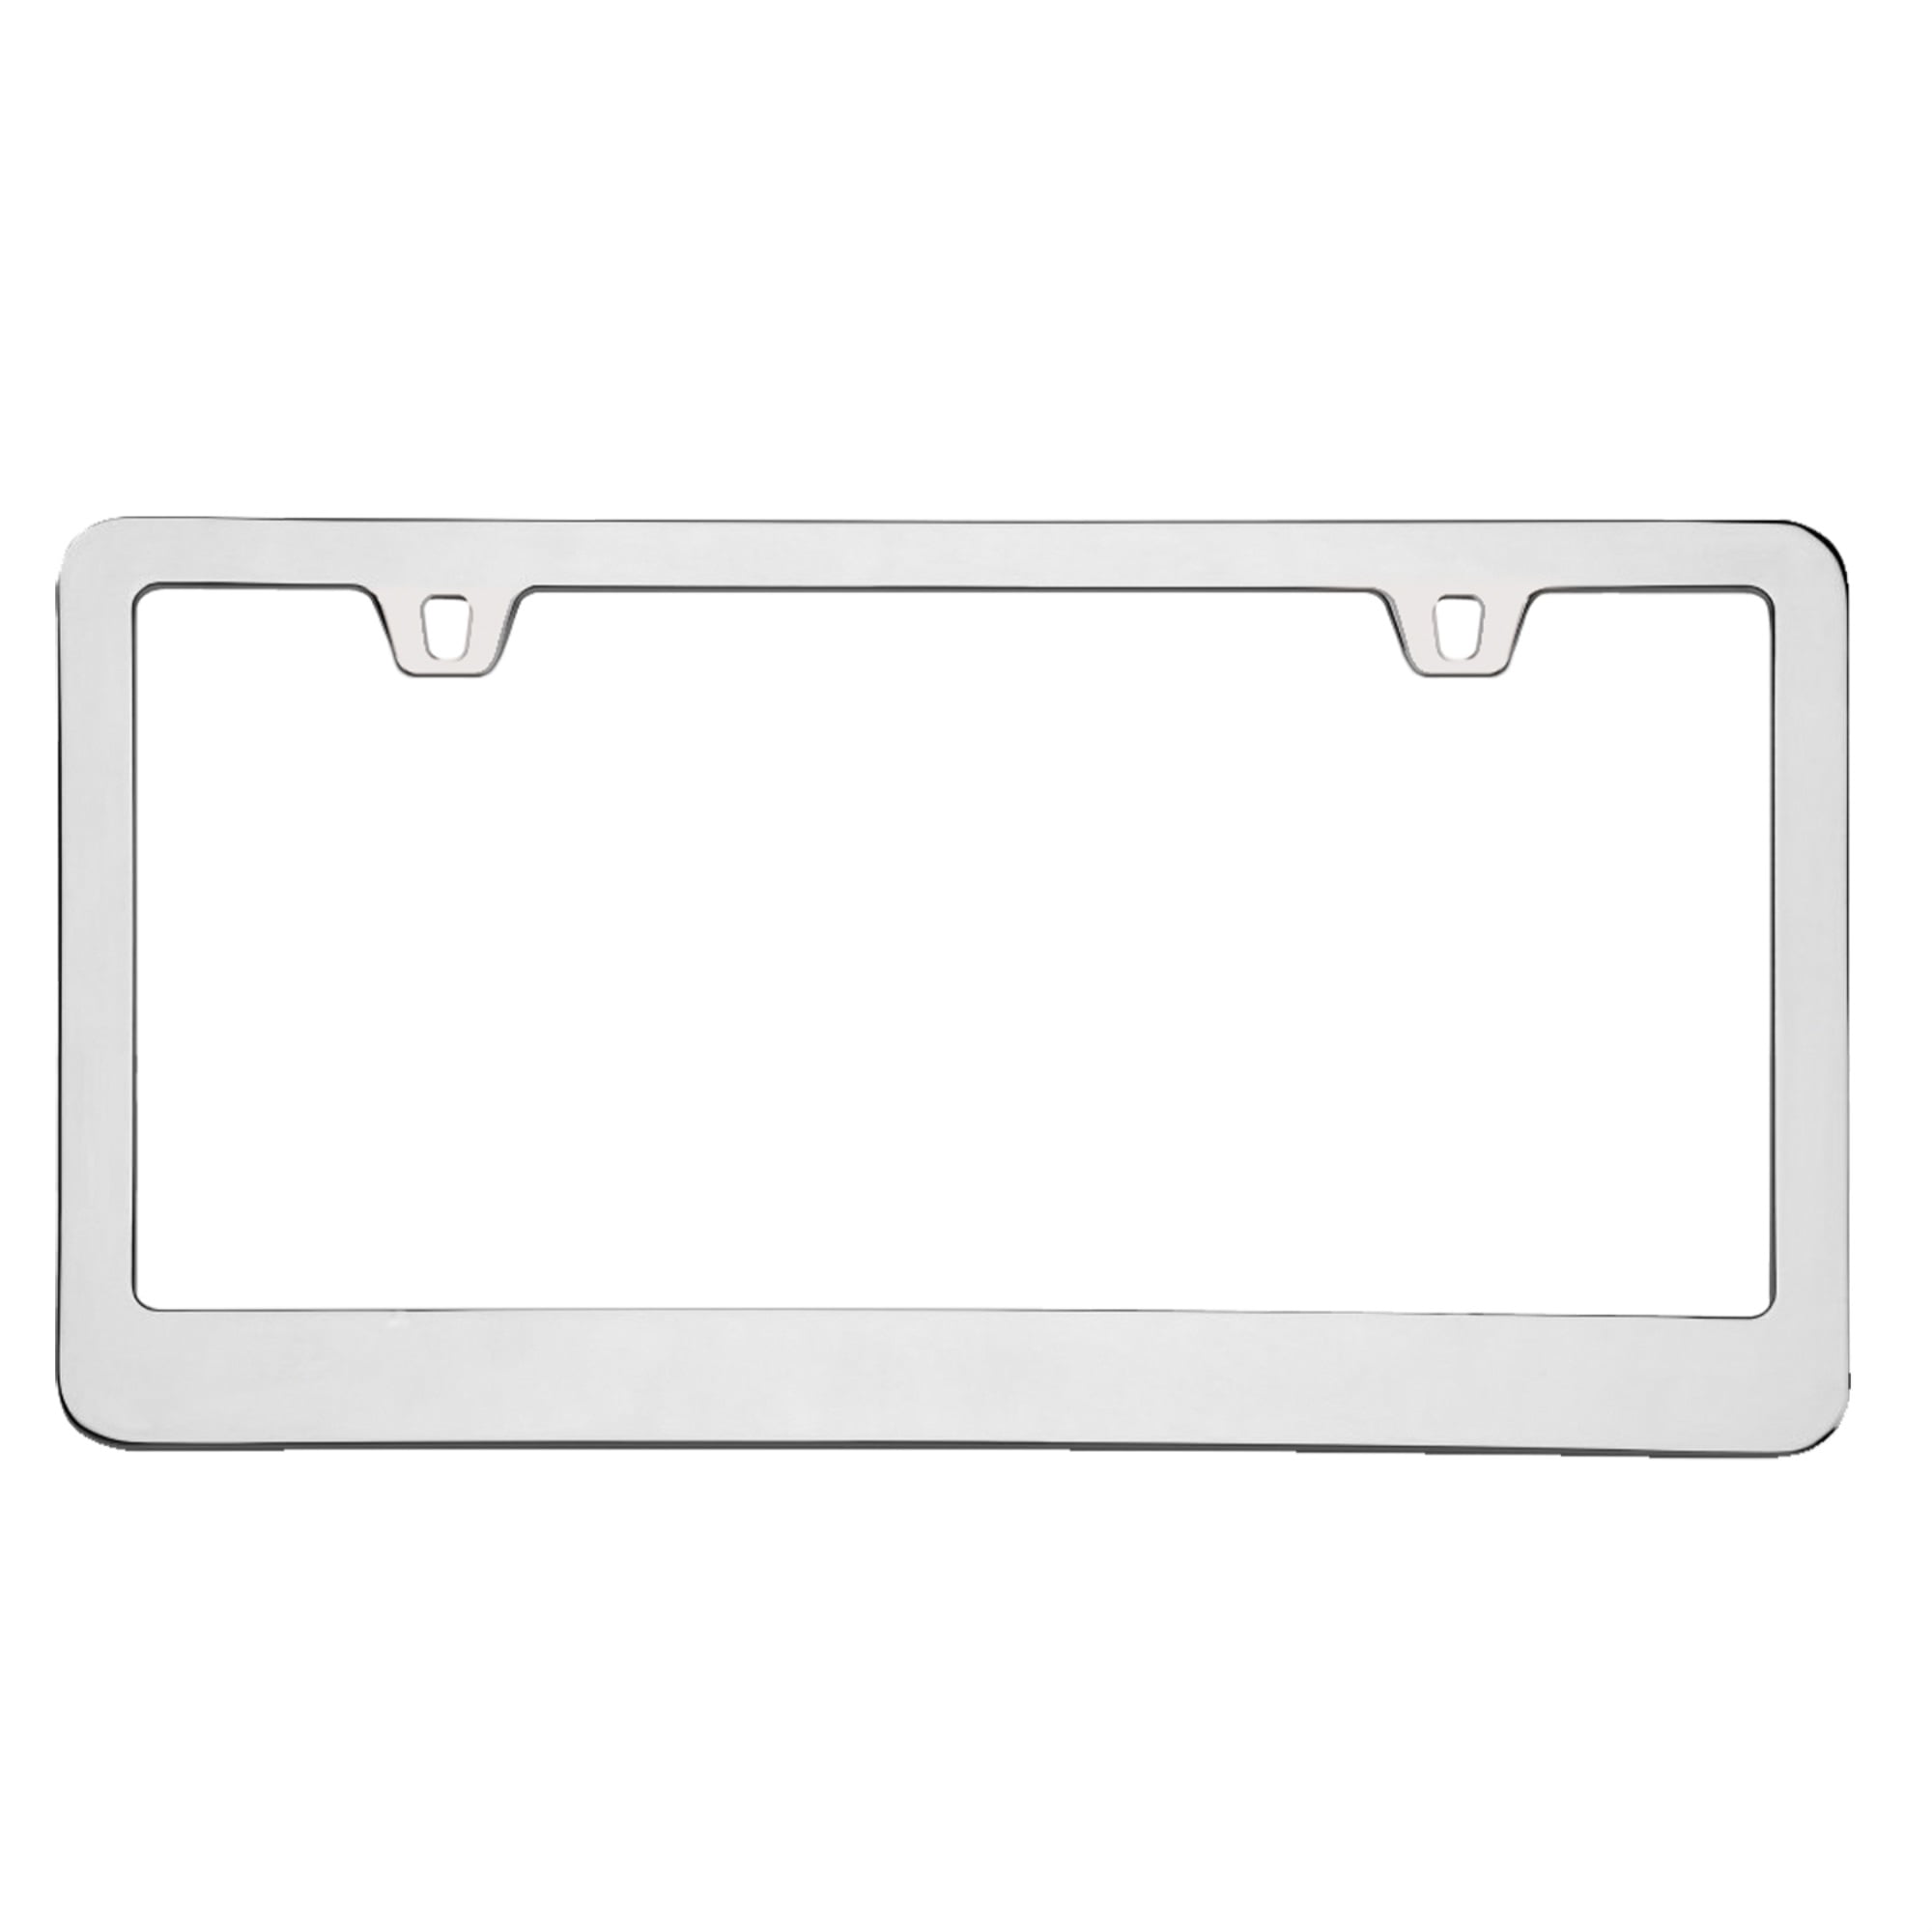 Cruiser Accessories 15130 Neo Sport License Plate Frame Chrome 